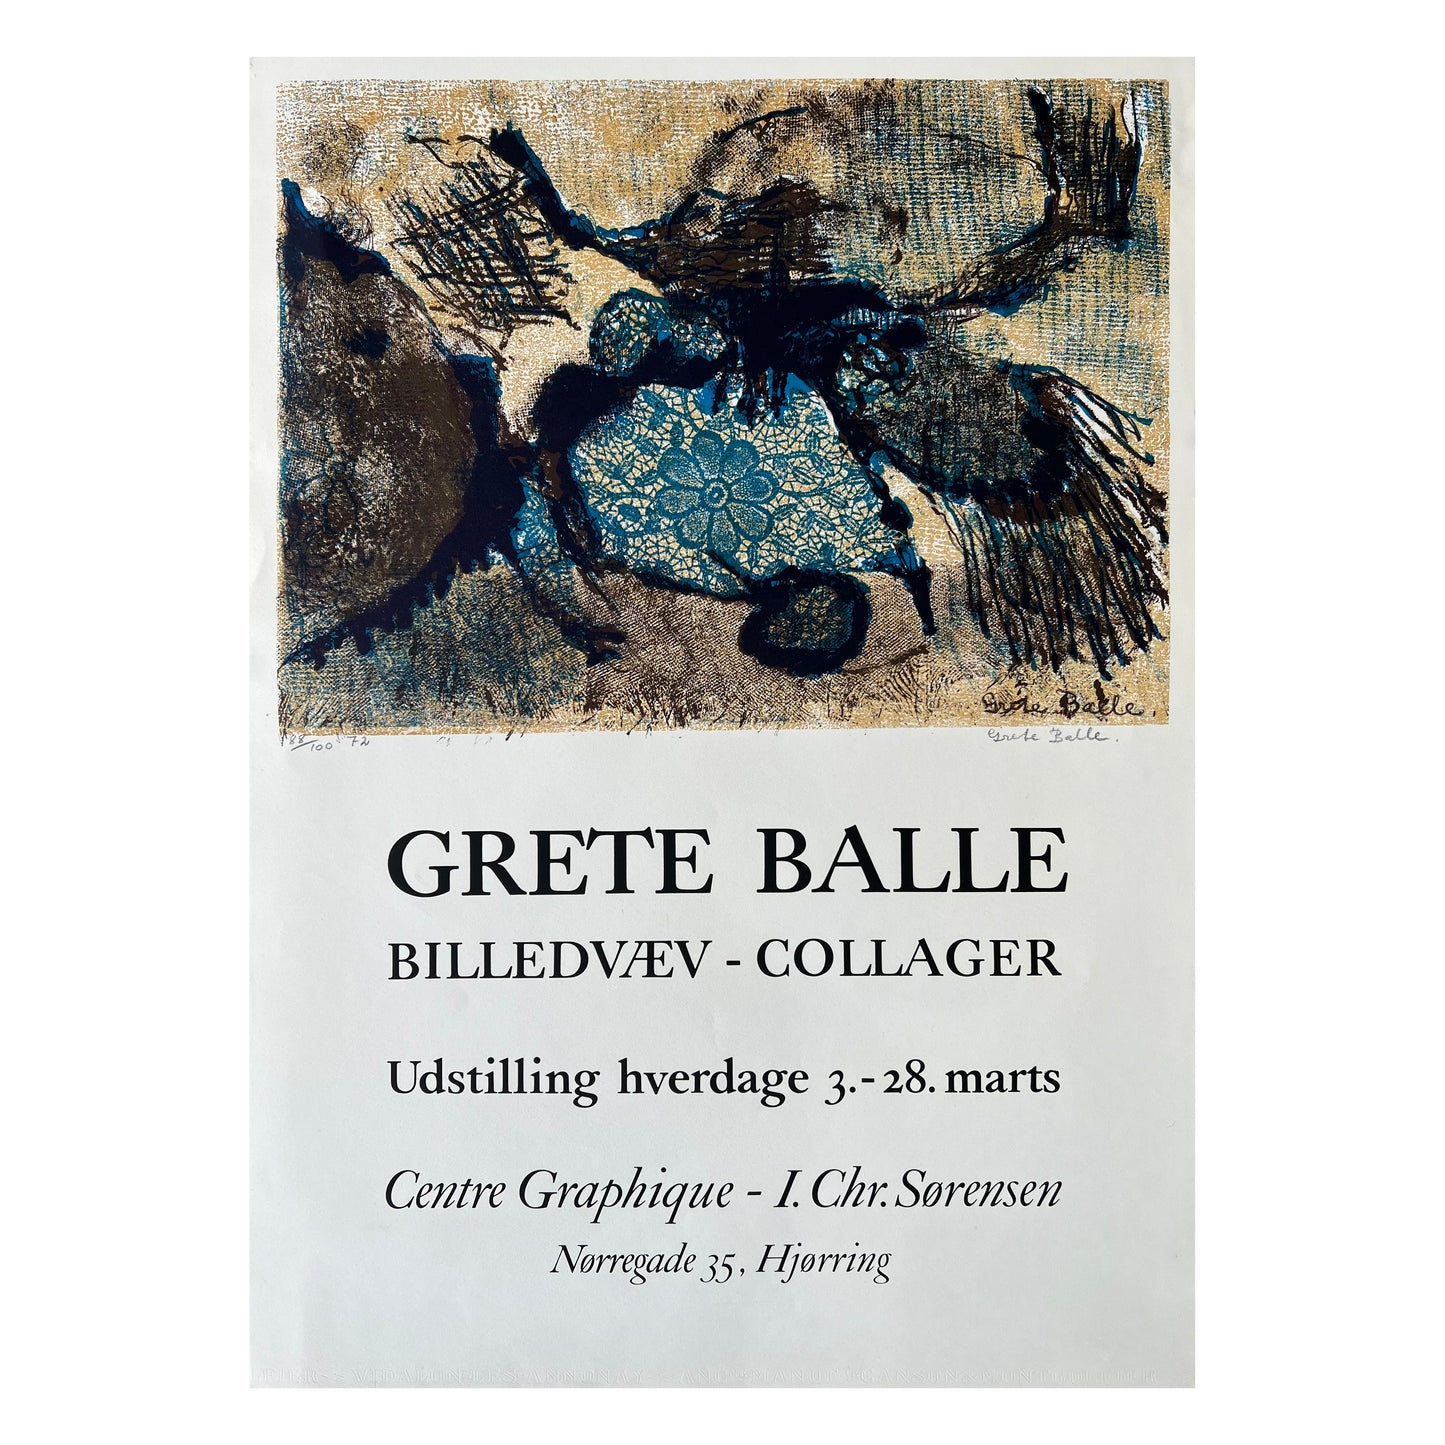 Grete Balle. “Billedvæv - Collager”, 1972